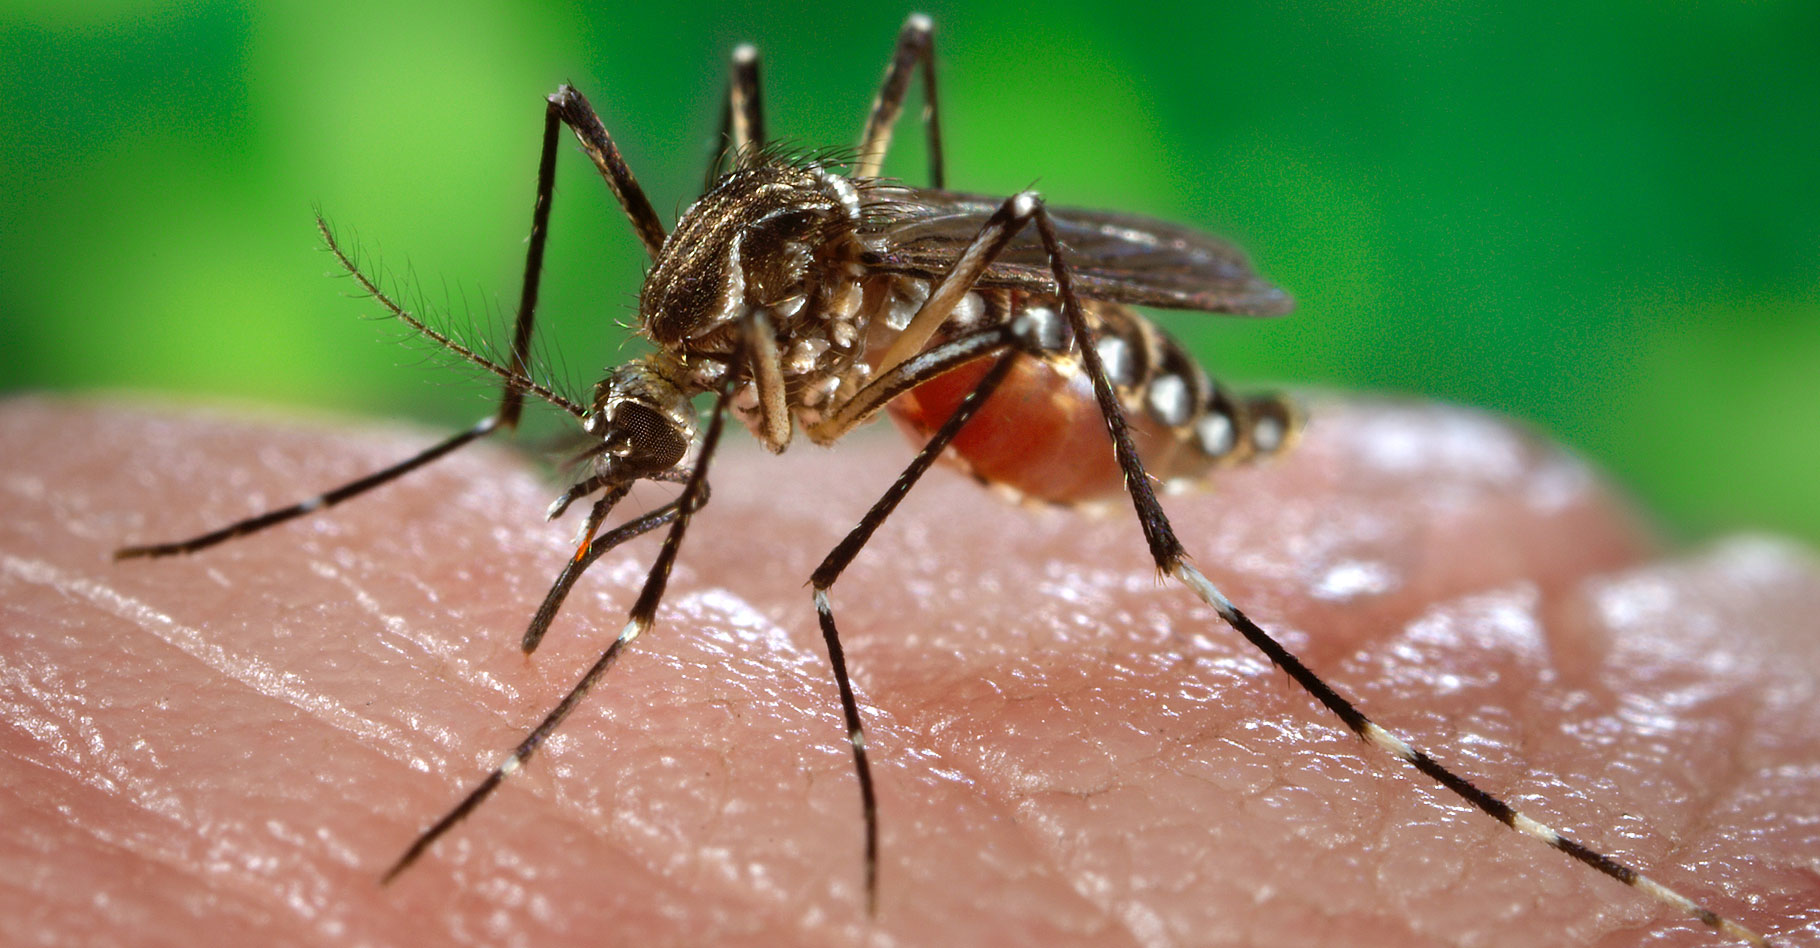 Le moustique peut transmettre une maladie. © James Gathany, Centers for Disease Control and Prevention, USA, domaine public